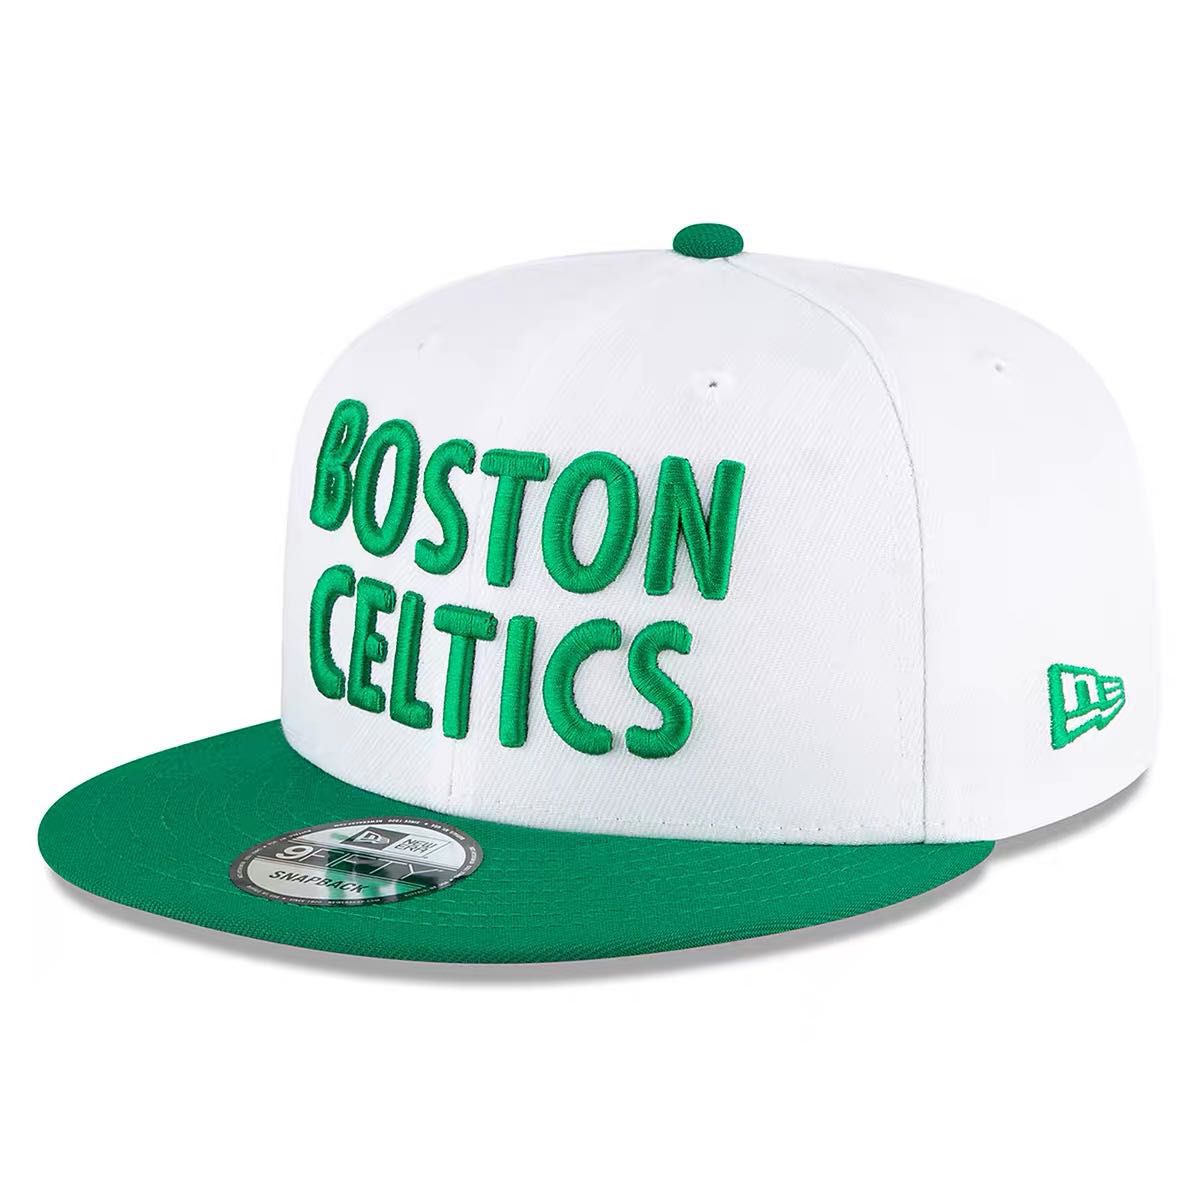 2022 NBA Boston Celtics Hat TX 07063